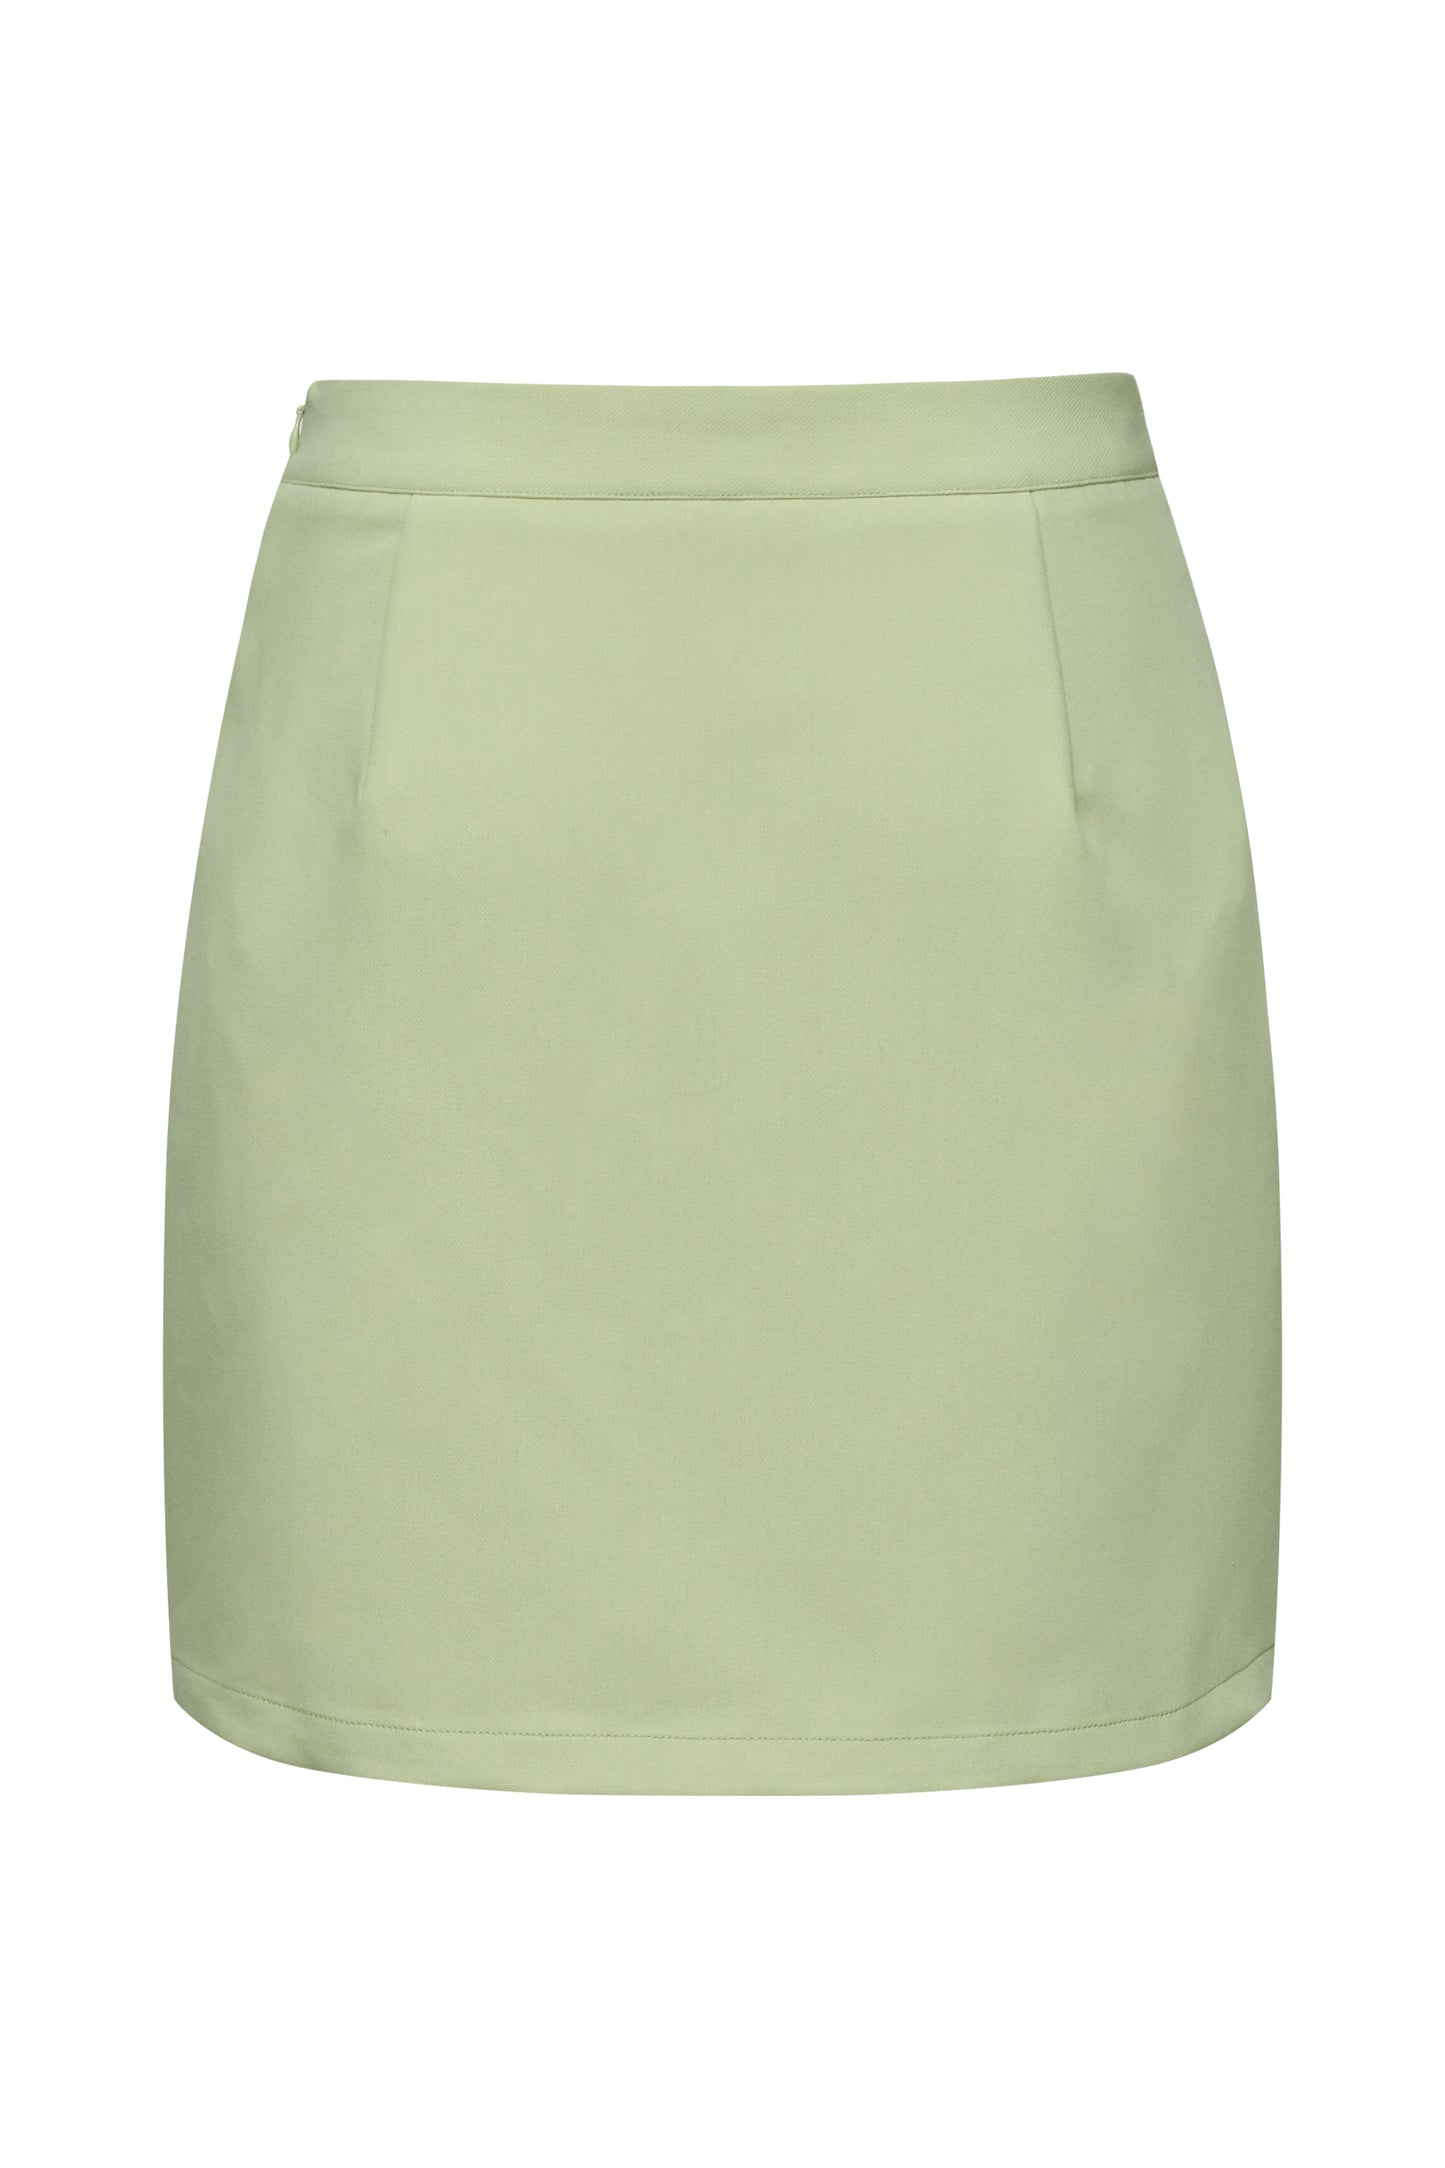 A-VIEW - Annali skirt - Mint